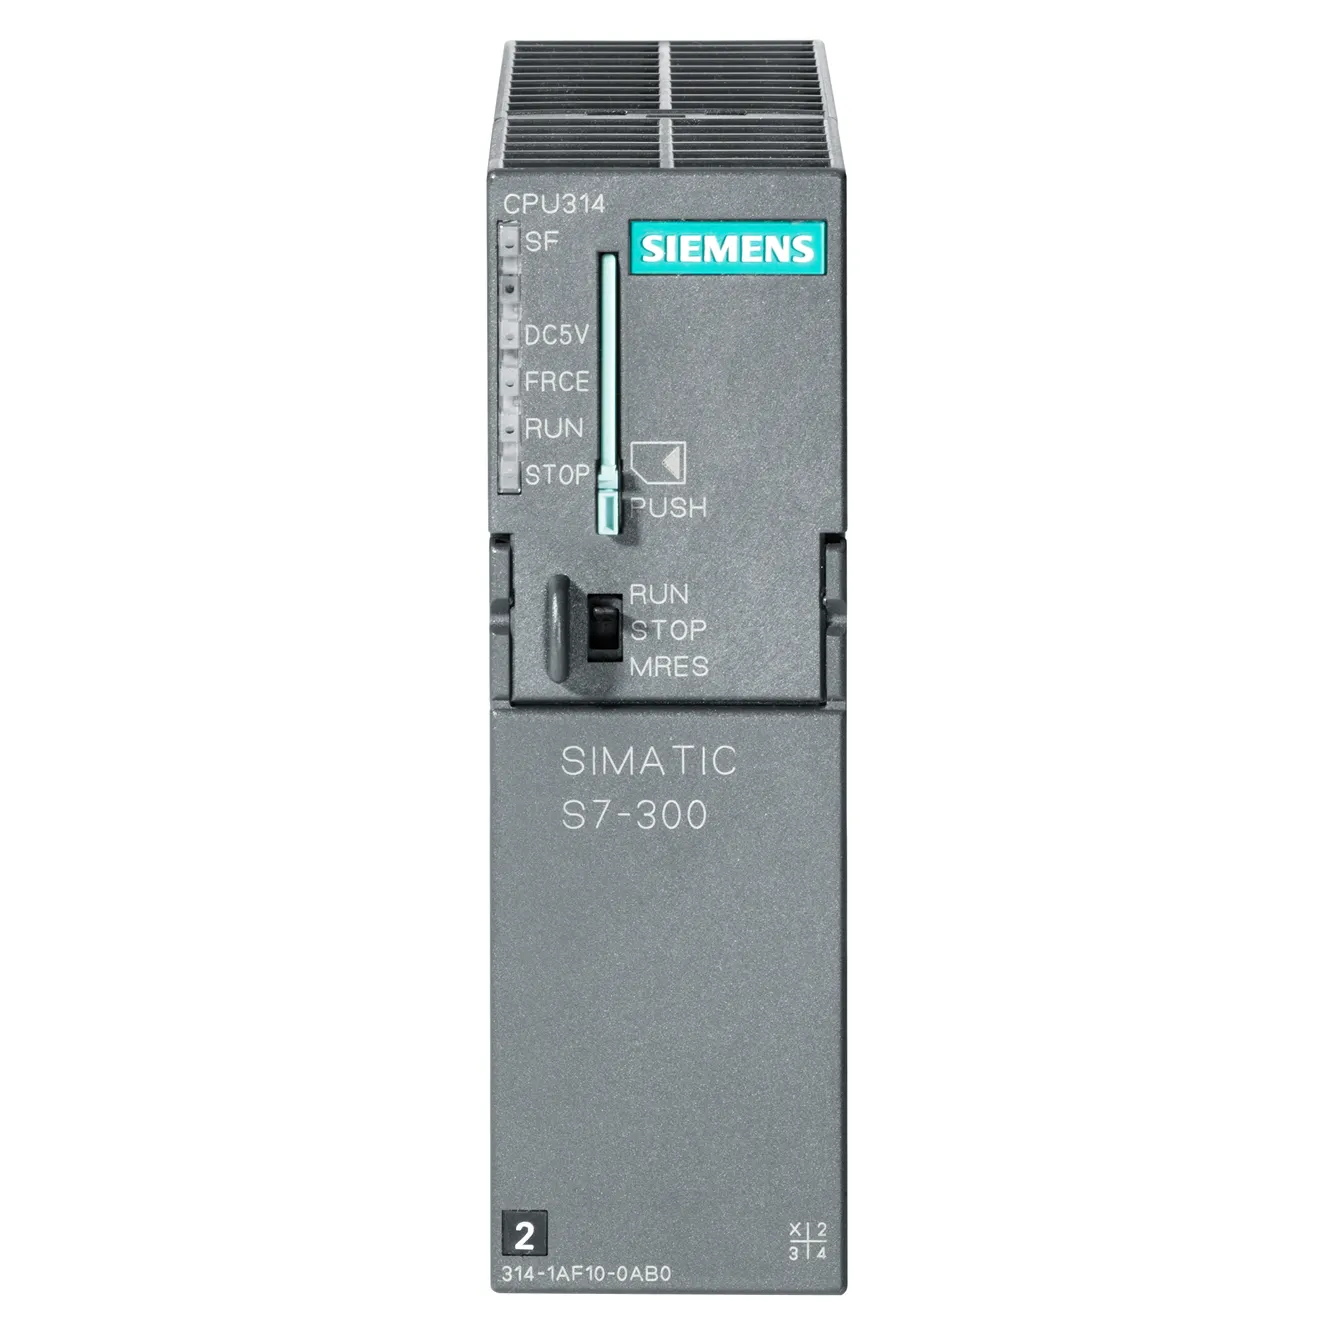 Original Siemens plc S7-300 series 6ES7314-1AG14-0AB0 6ES73141AG140AB0 New PLC CPU module 6ES73141AG140AB0 In Stock